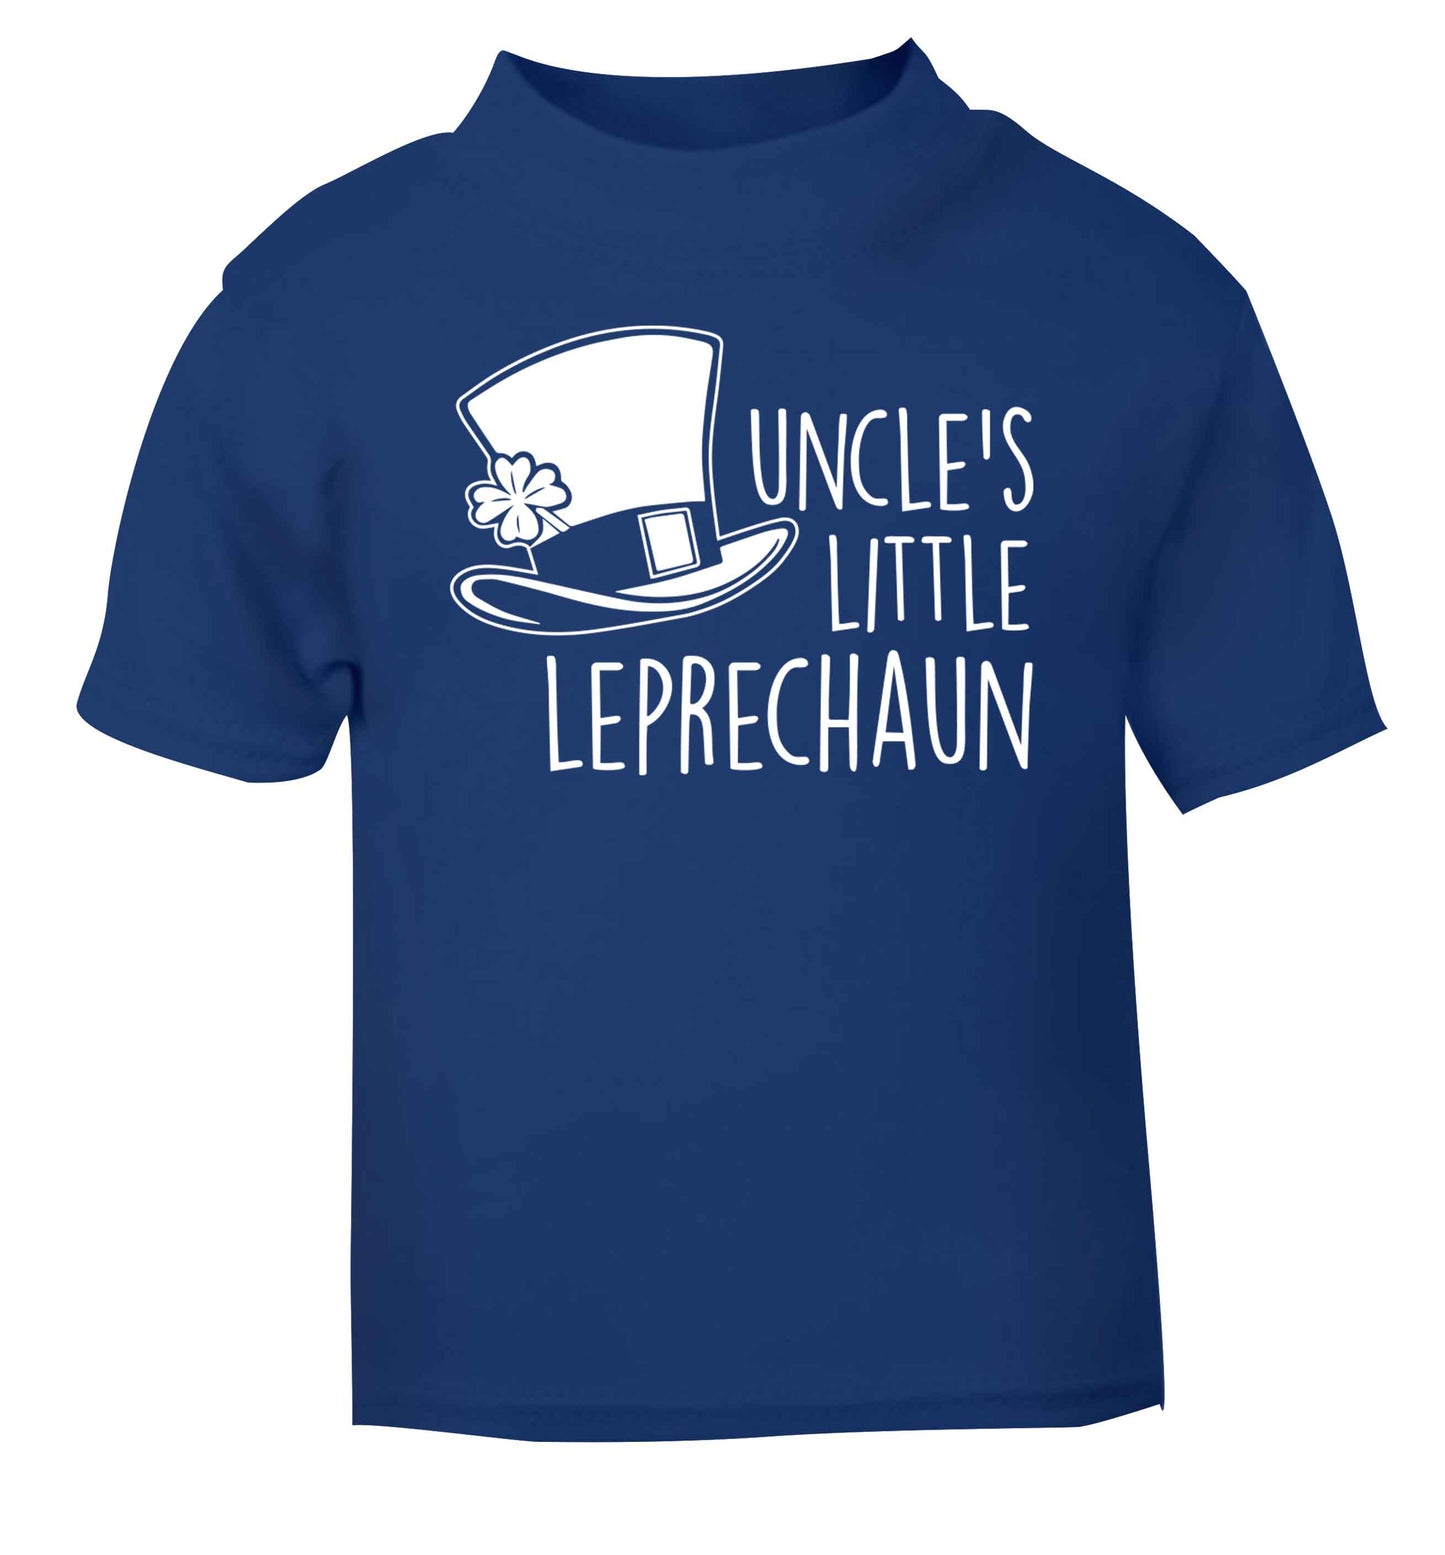 Uncles little leprechaun blue baby toddler Tshirt 2 Years